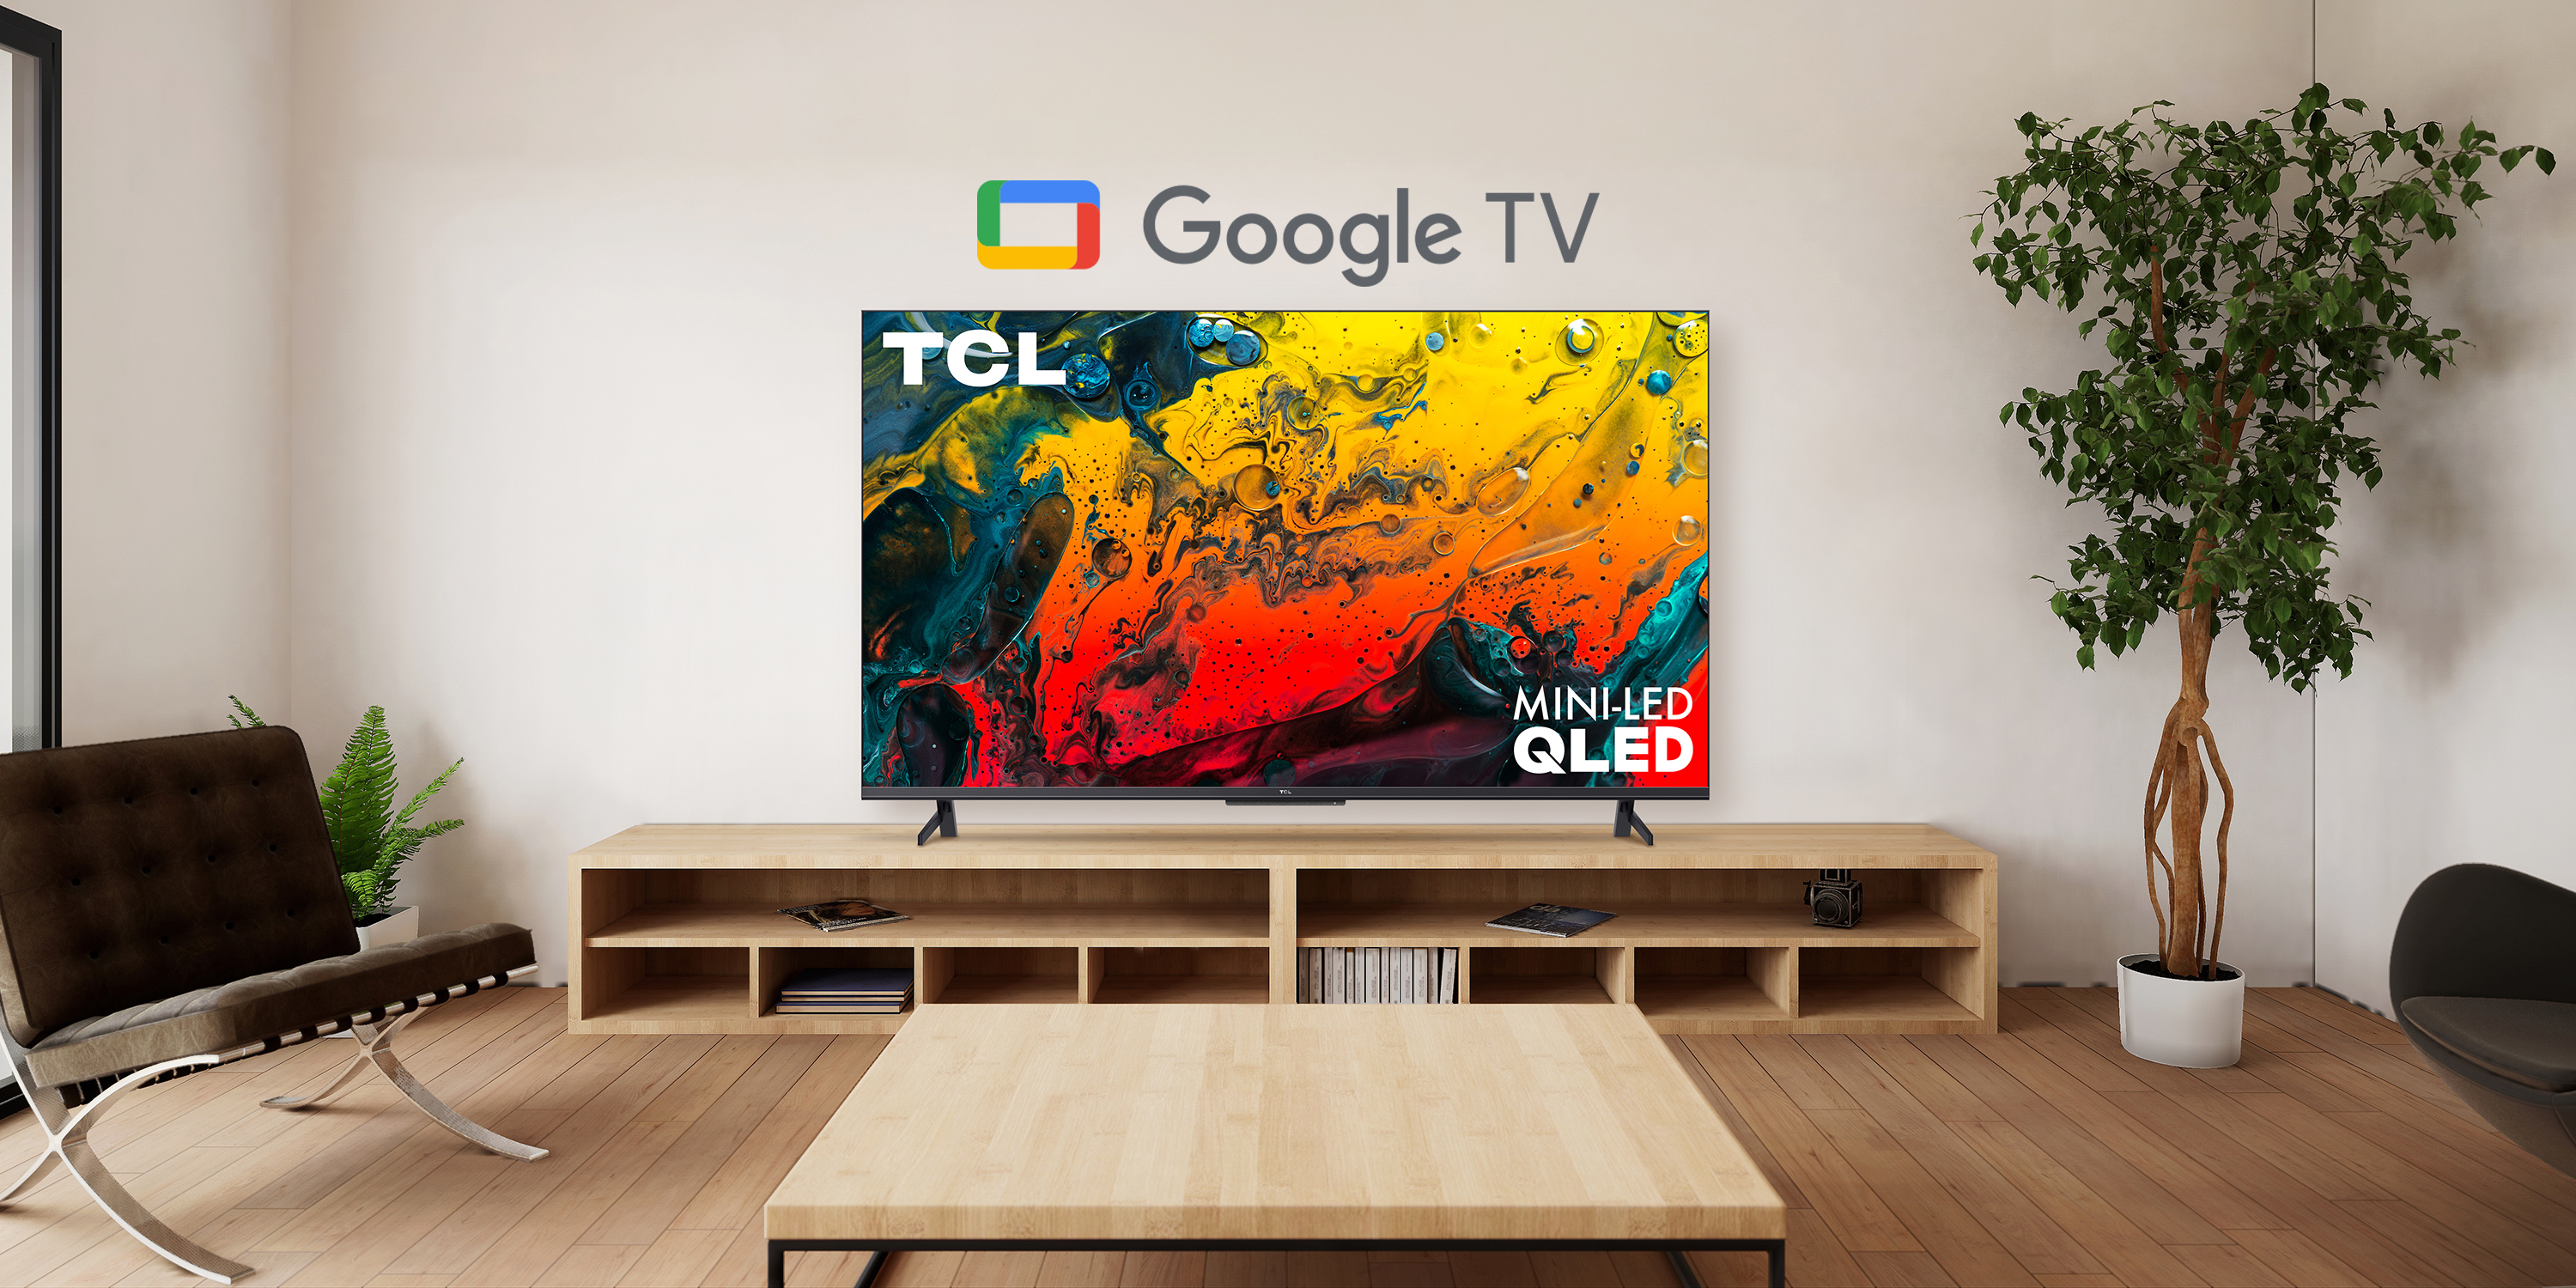 Tcl телевизоры 165. TCL 6-Series. Google TV телевизор. Телевизор TCL Google TV.